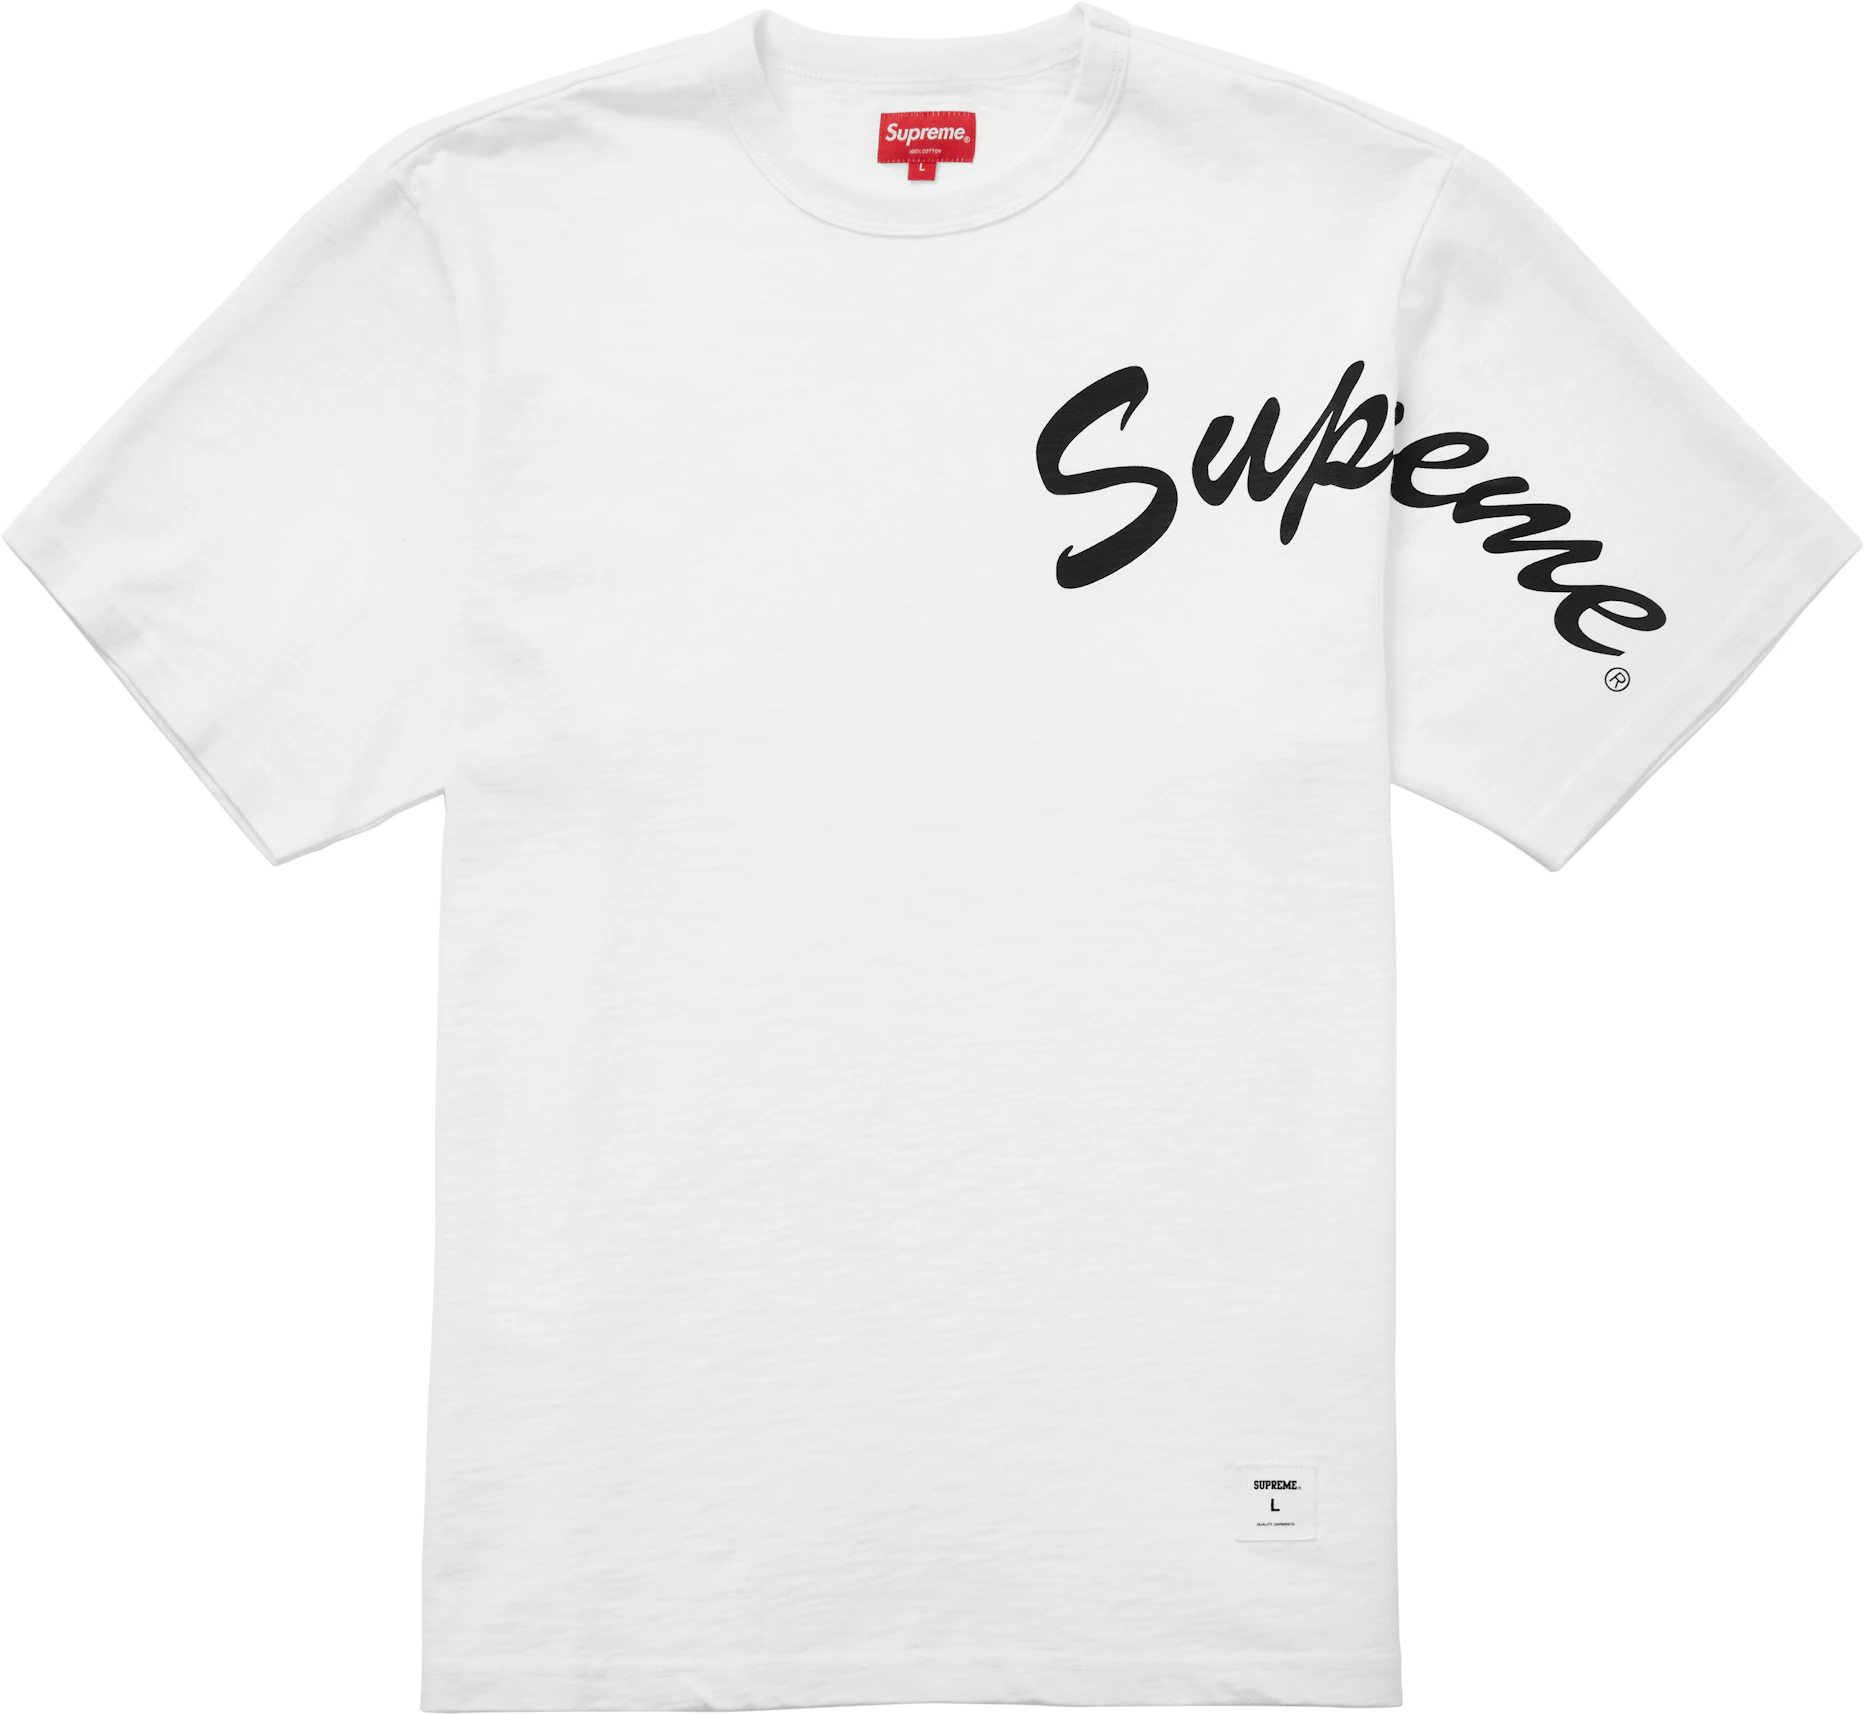 Supreme Shoulder Arc S/S Top White - FW20 - GB